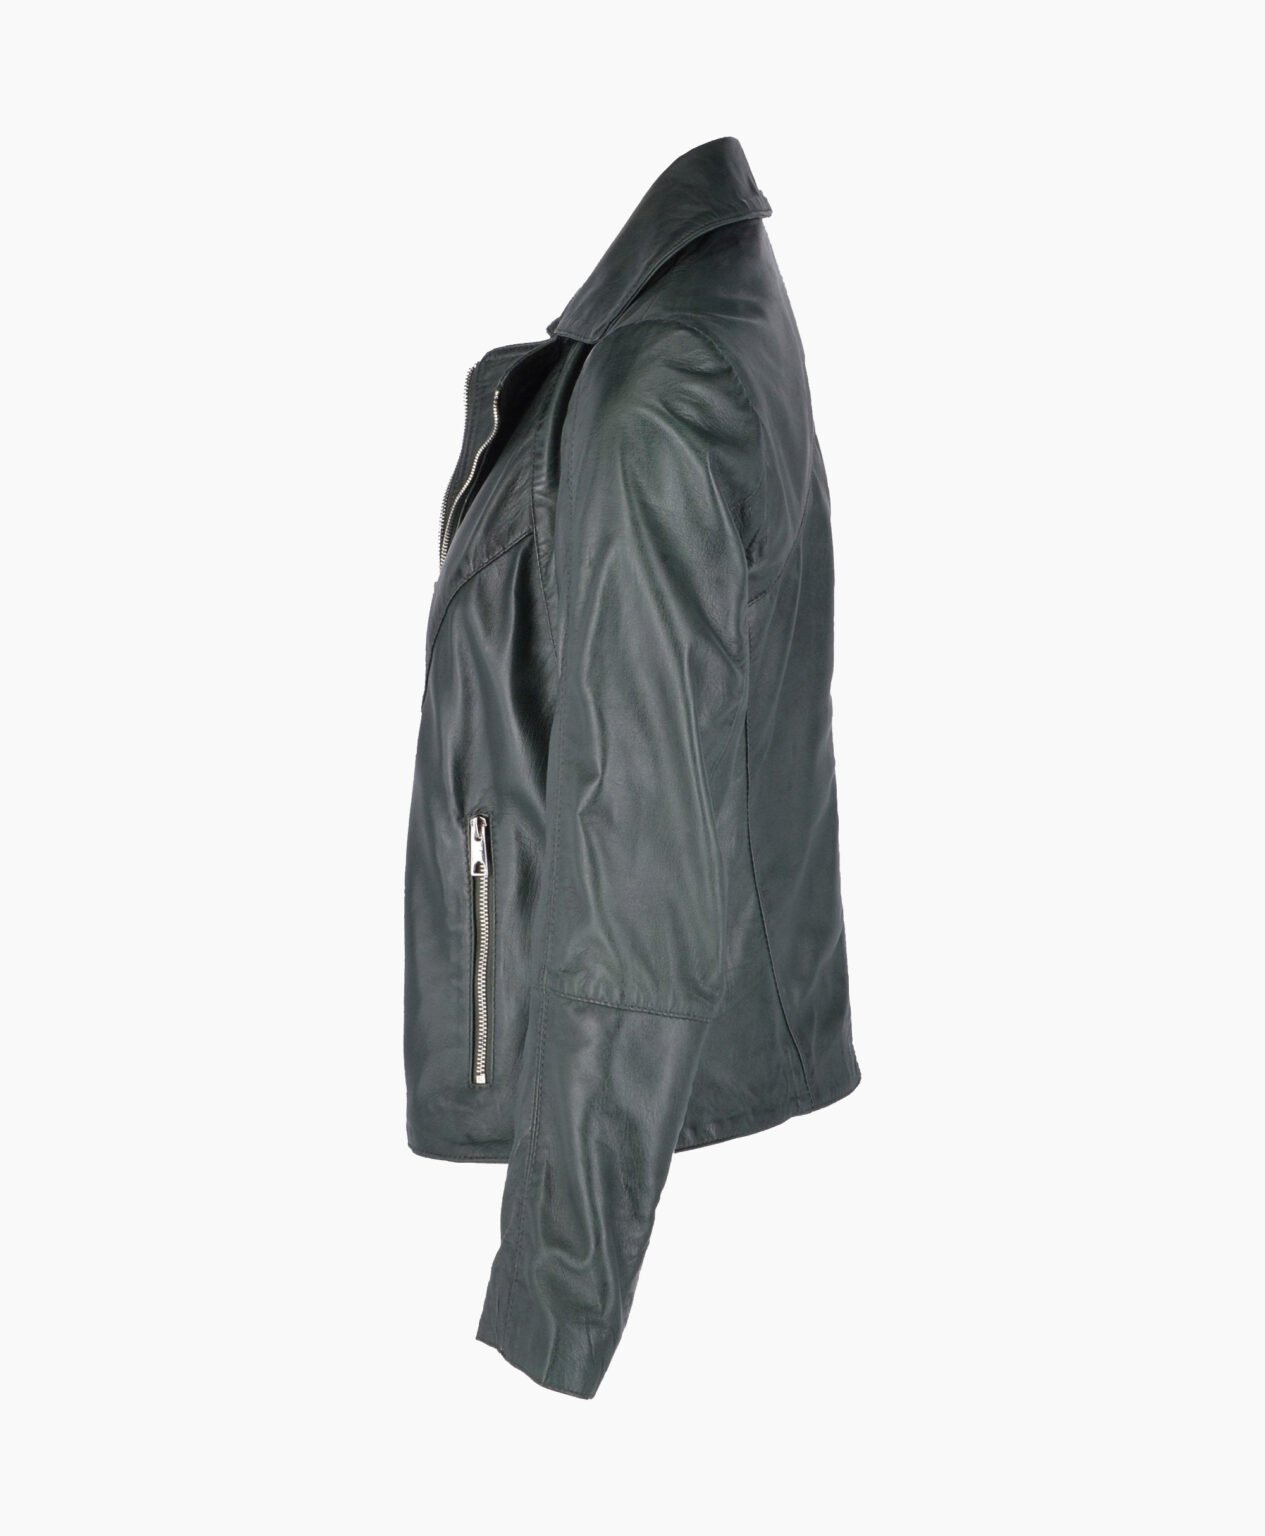 vogue-jacket-leather-biker-jacket-green-el-dorado-image201